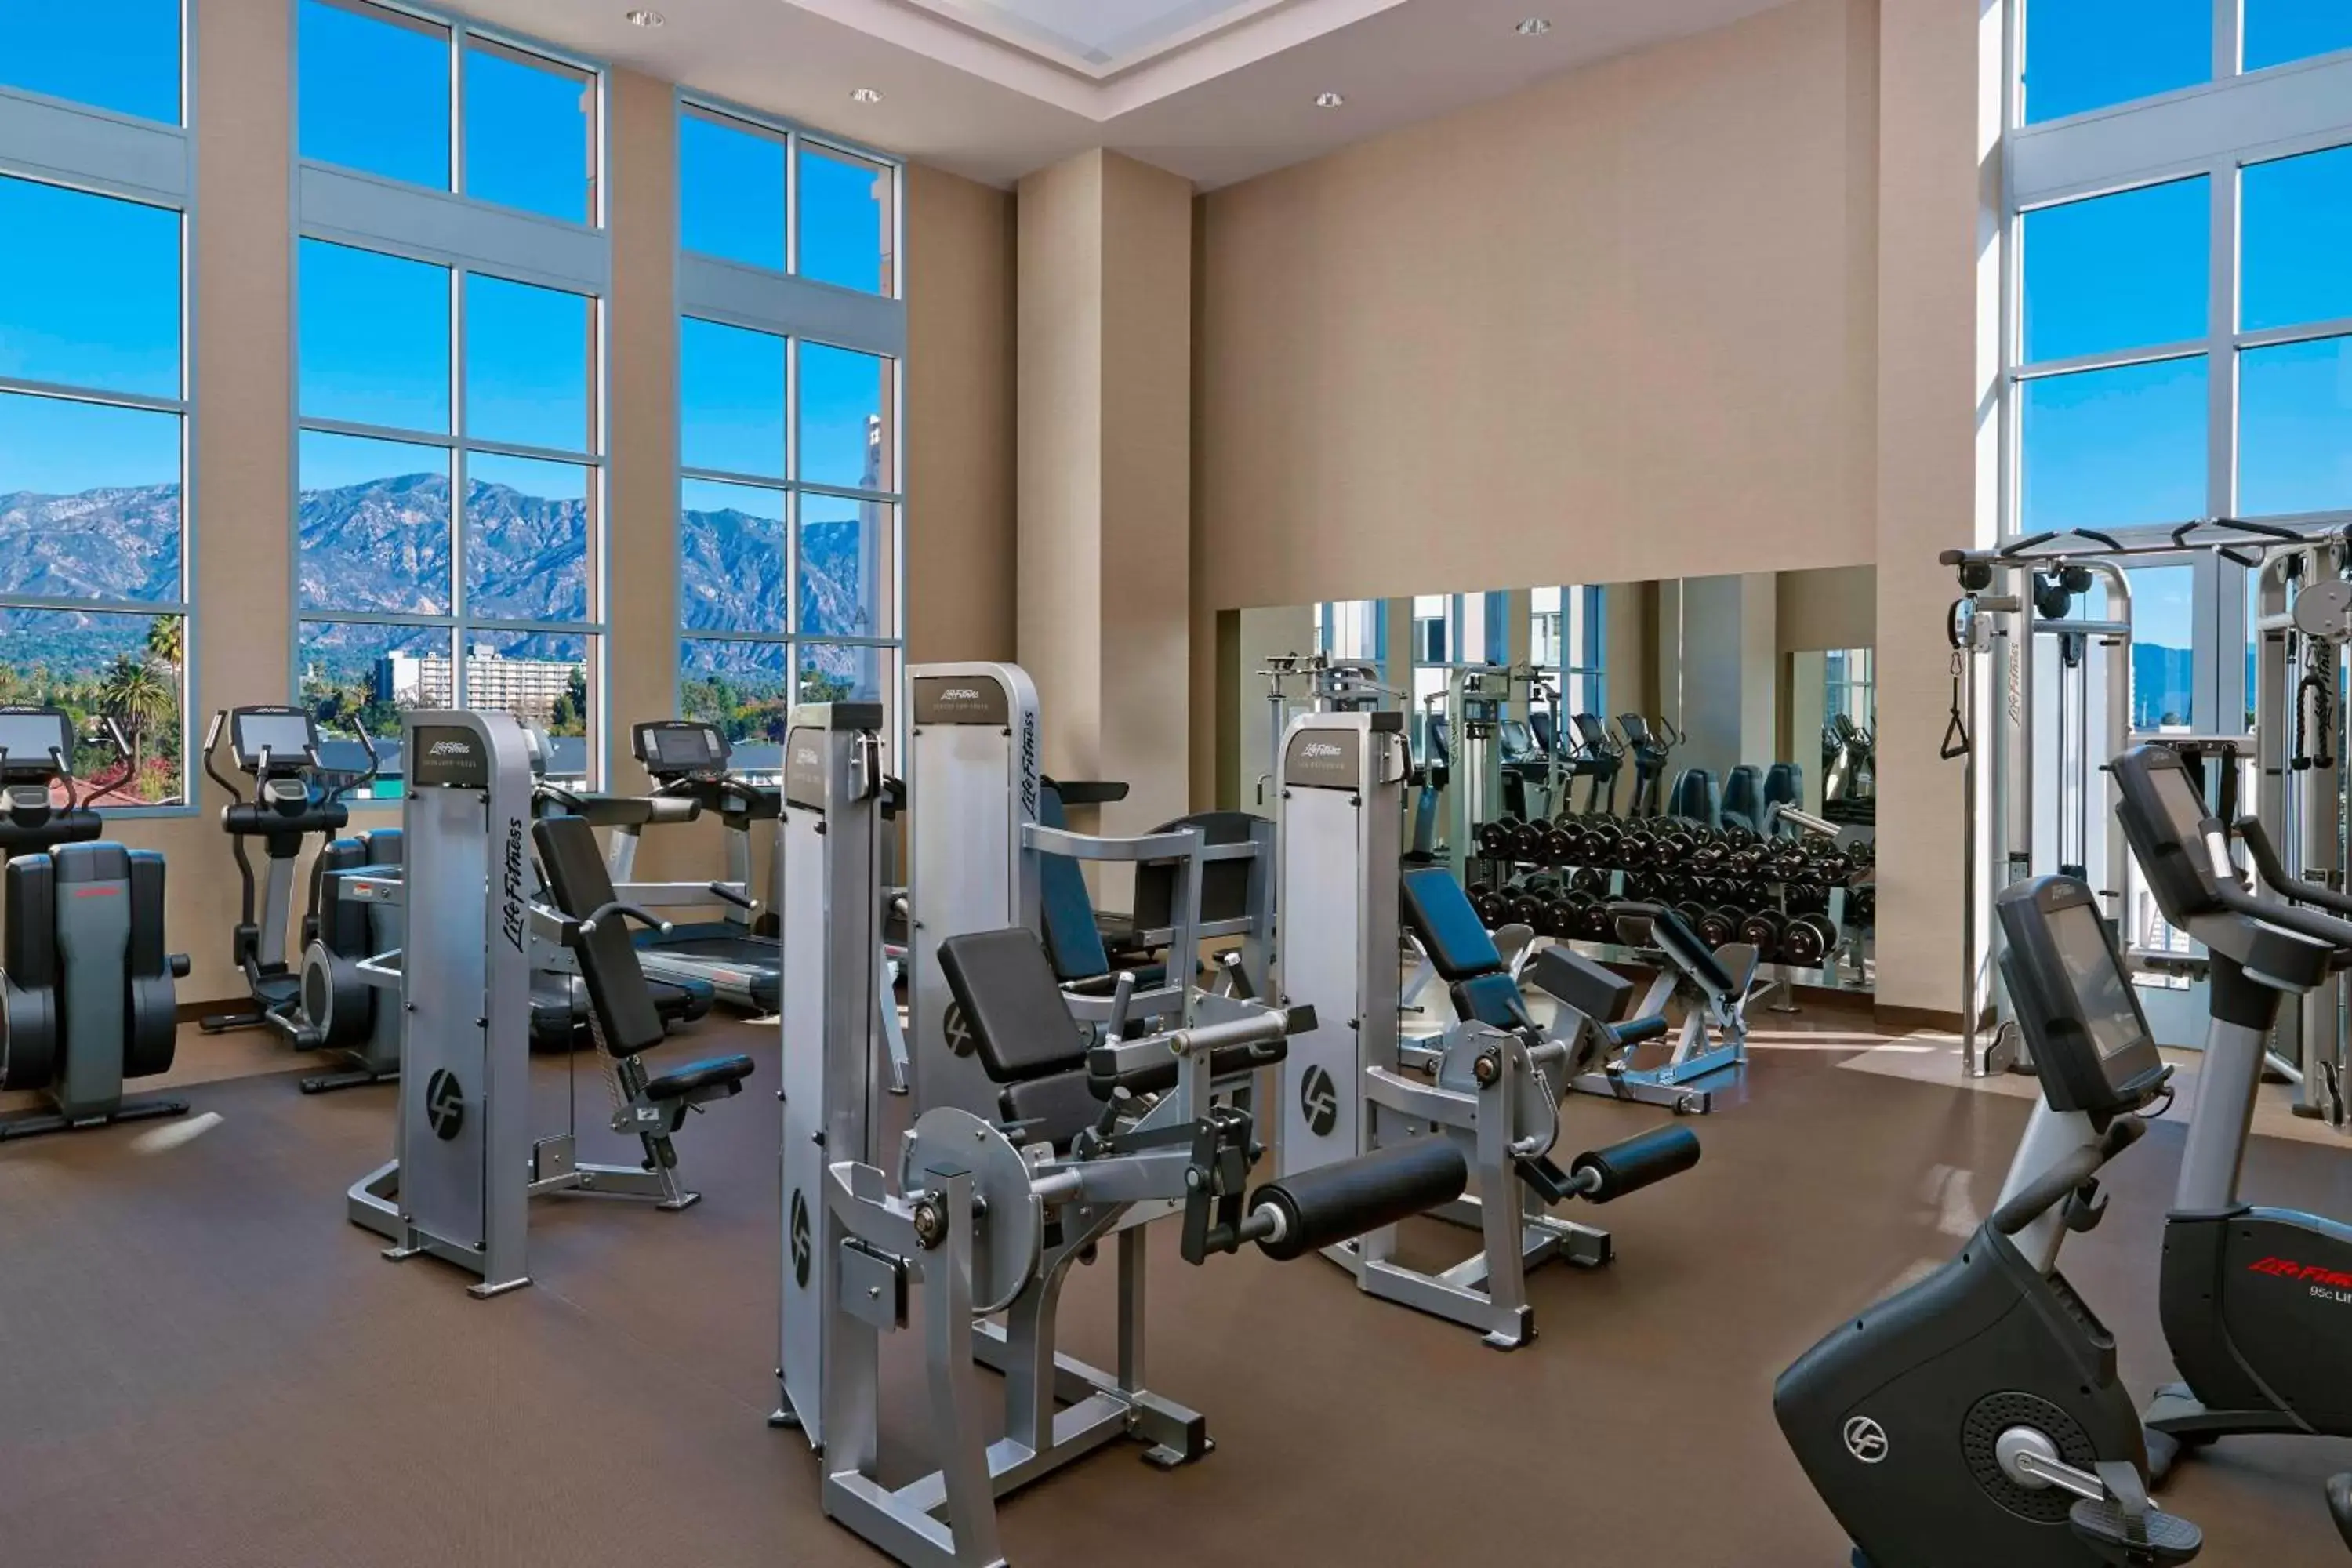 Fitness centre/facilities, Fitness Center/Facilities in The Westin Pasadena